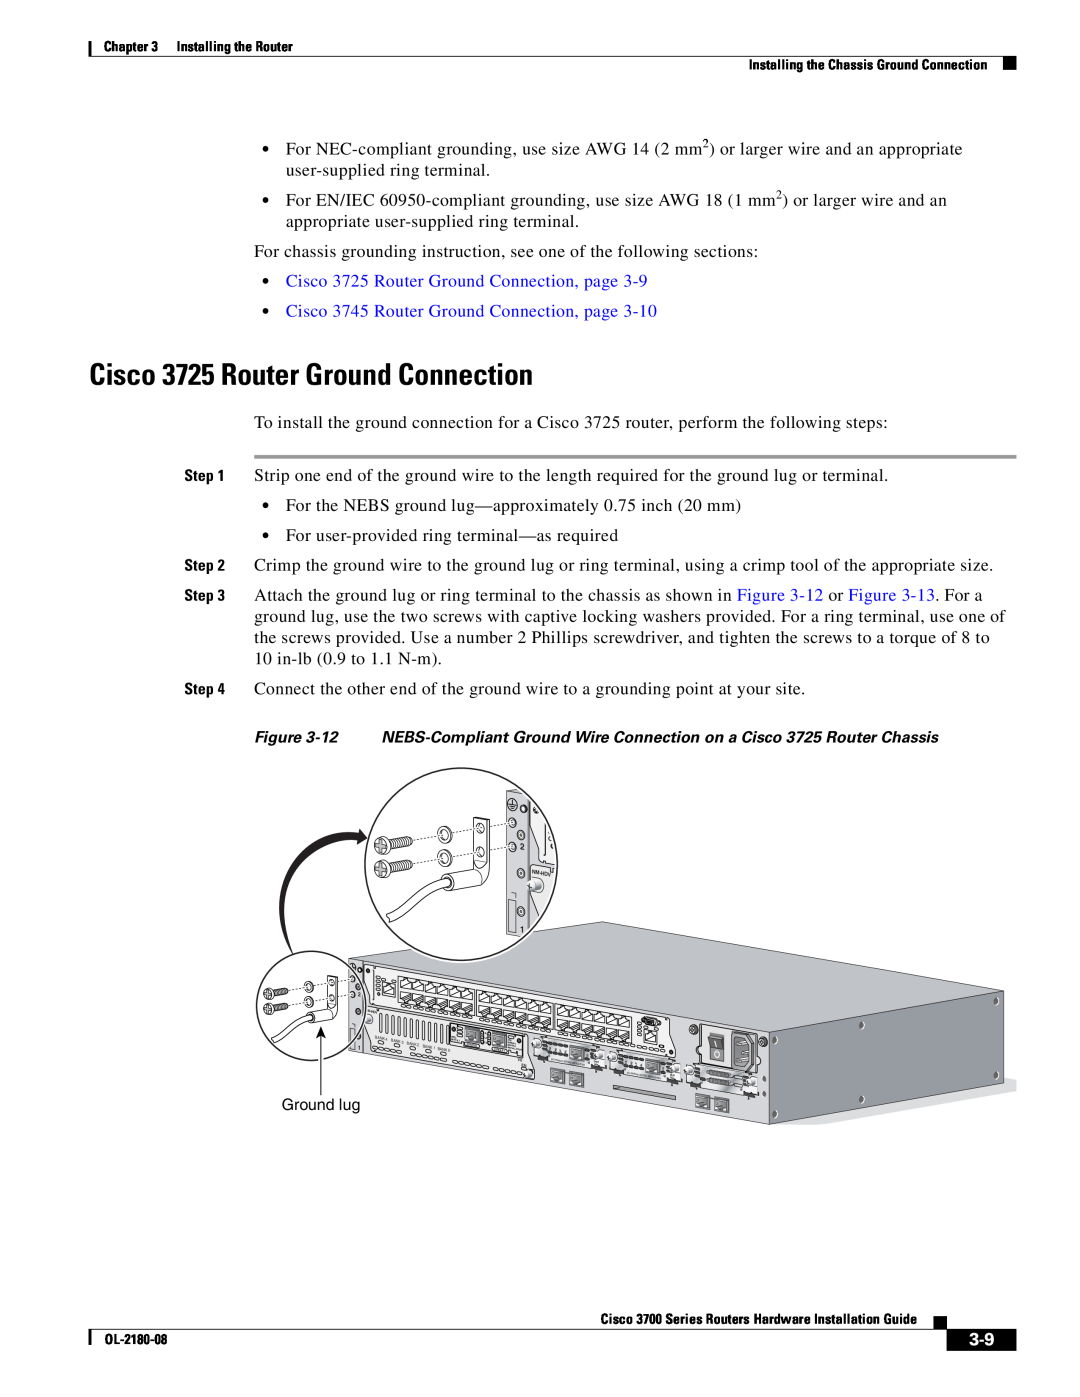 Cisco Systems 3700 Series manual Cisco 3725 Router Ground Connection, page, Cisco 3745 Router Ground Connection, page 